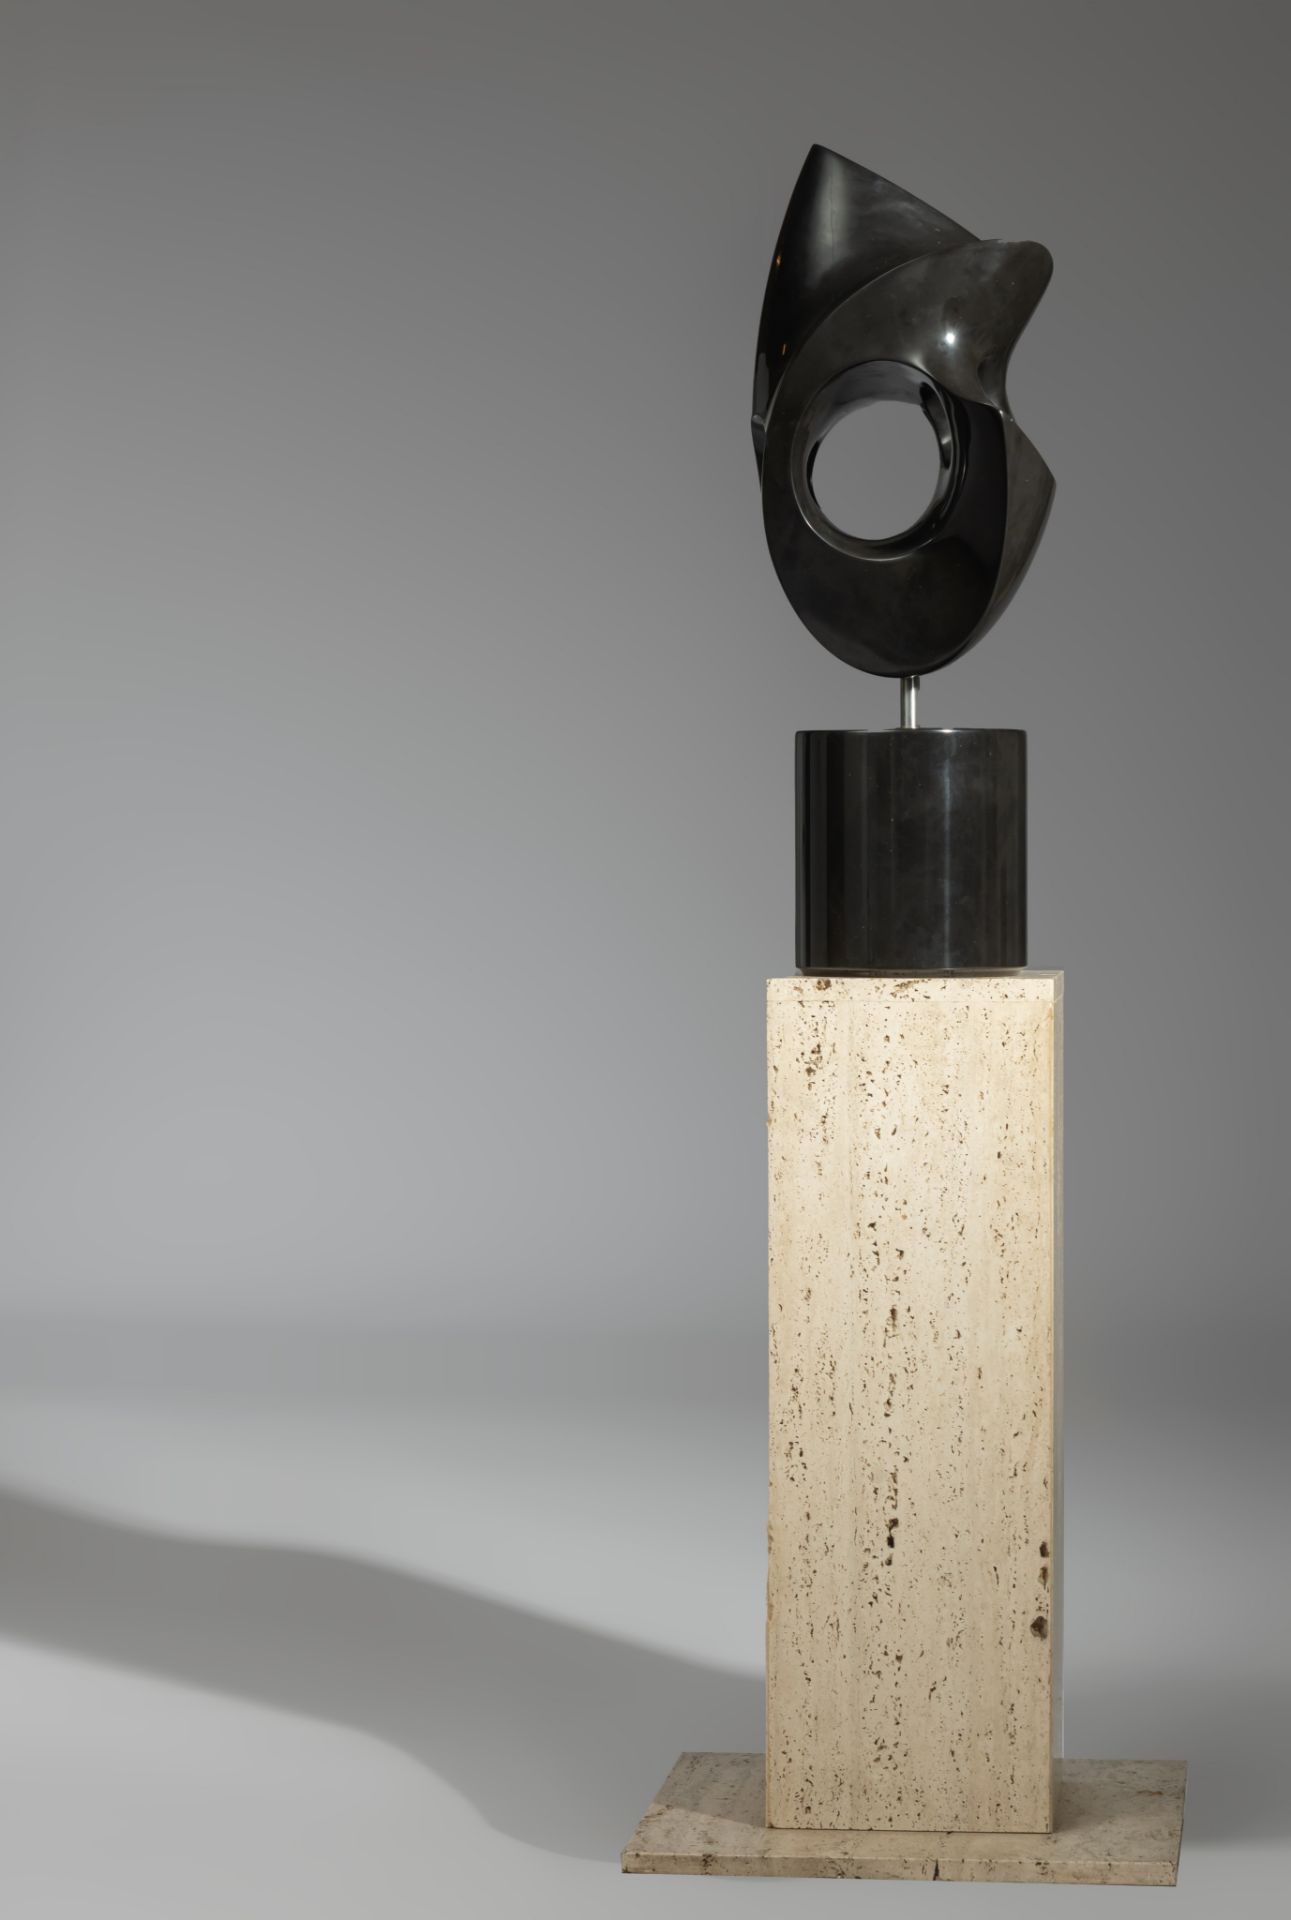 Jeanine Behaeghel (1940-1993), abstract sculpture, 1988, noir Belge marble on a travertine pedestal, - Image 2 of 18